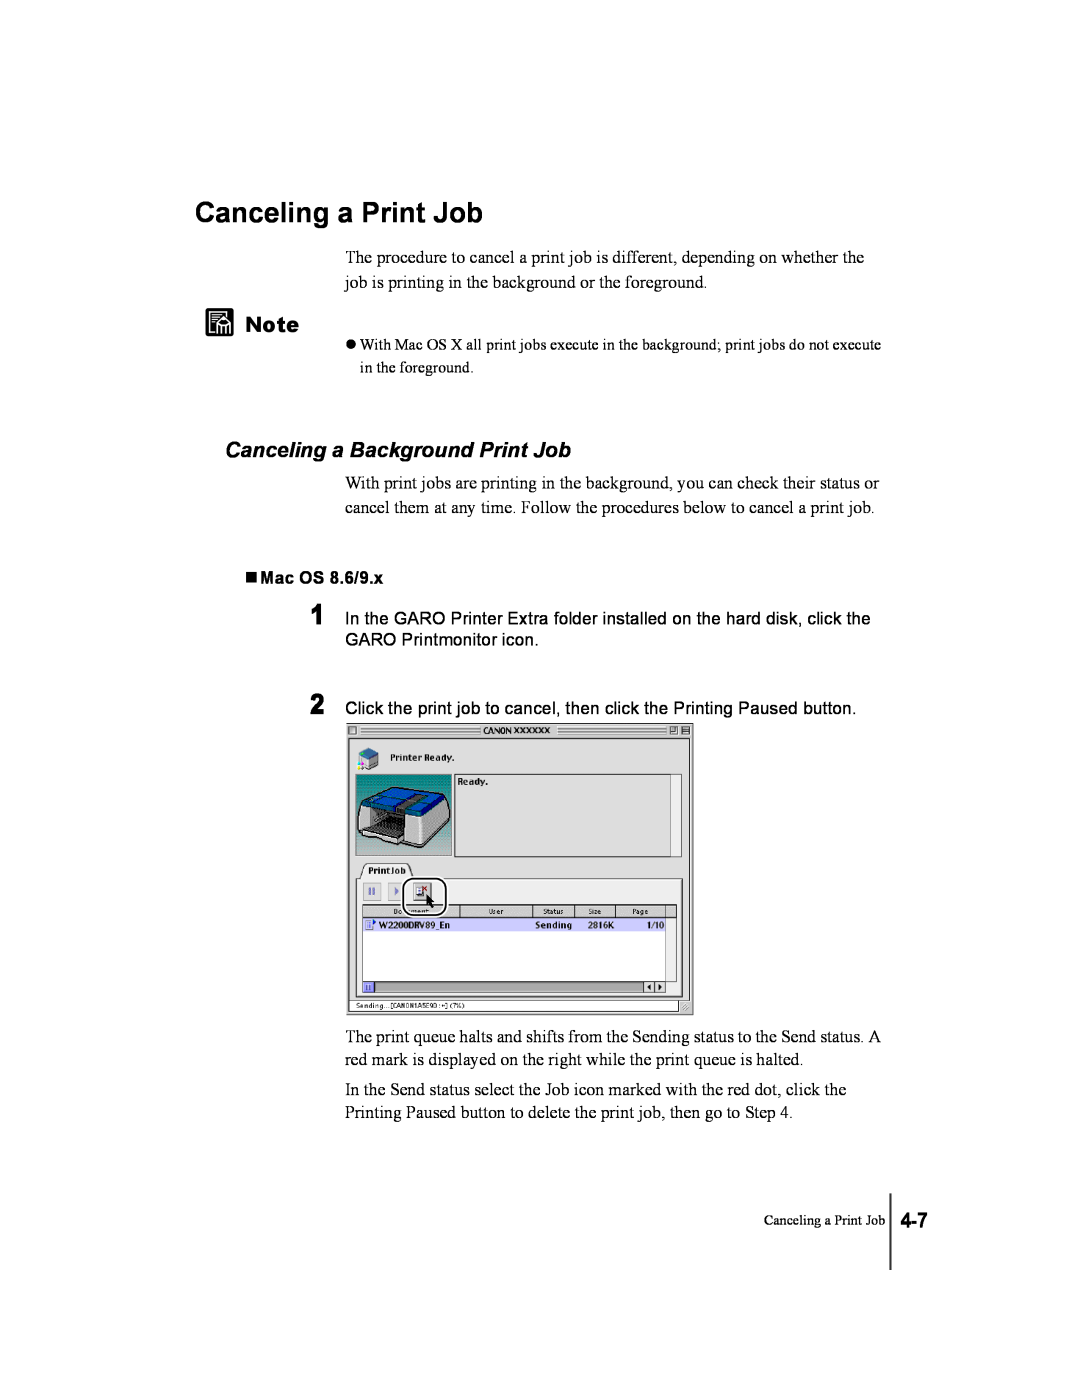 Canon W2200 manual Canceling a Background Print Job, Canceling a Print Job, T Mac OS 8.6/9.x 